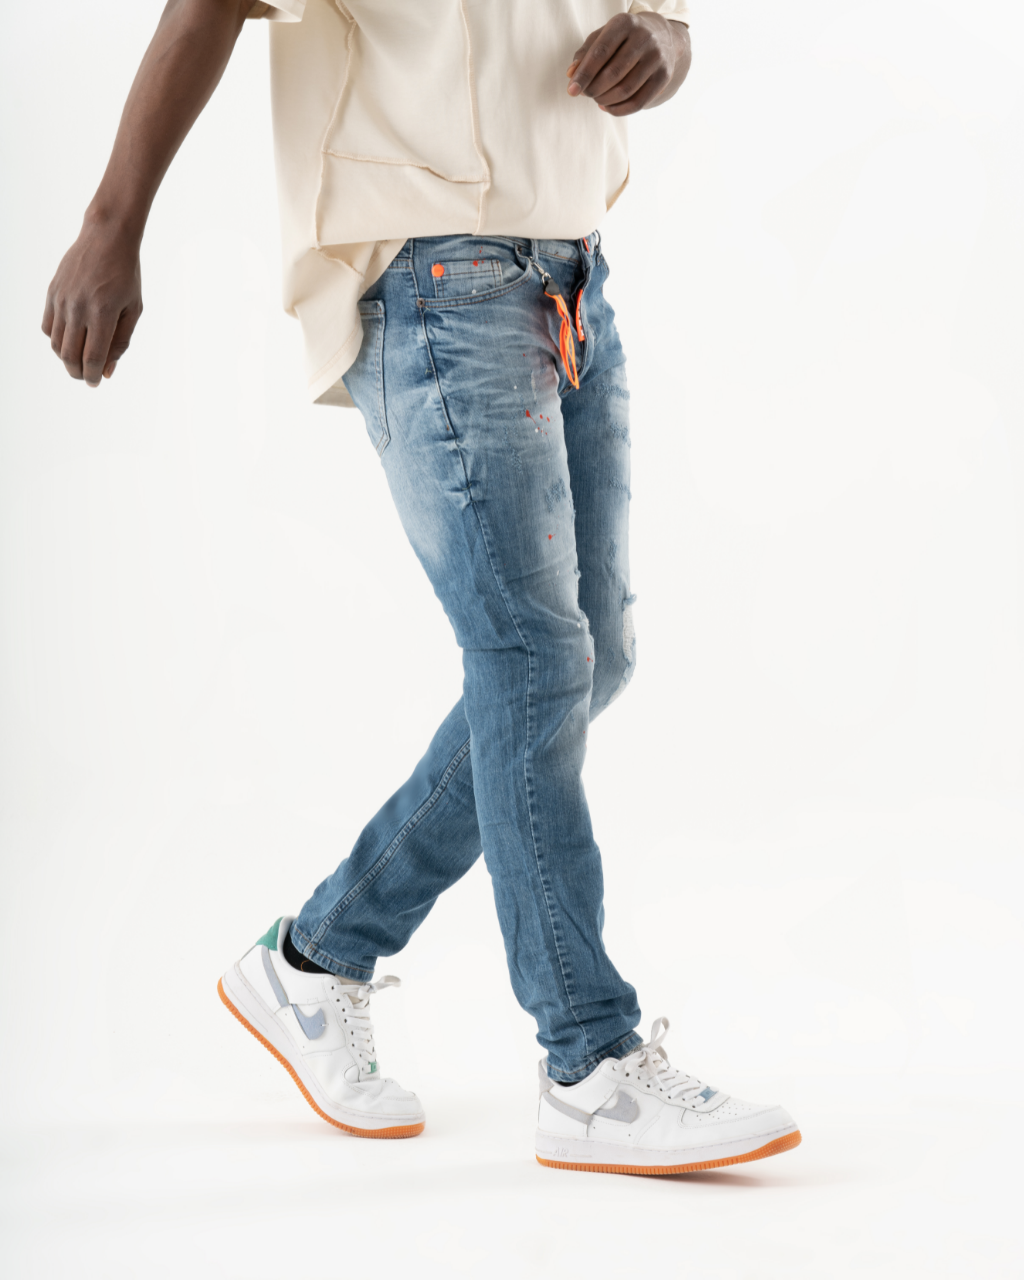 A man in blue jeans and orange TEZAR sneakers is walking.